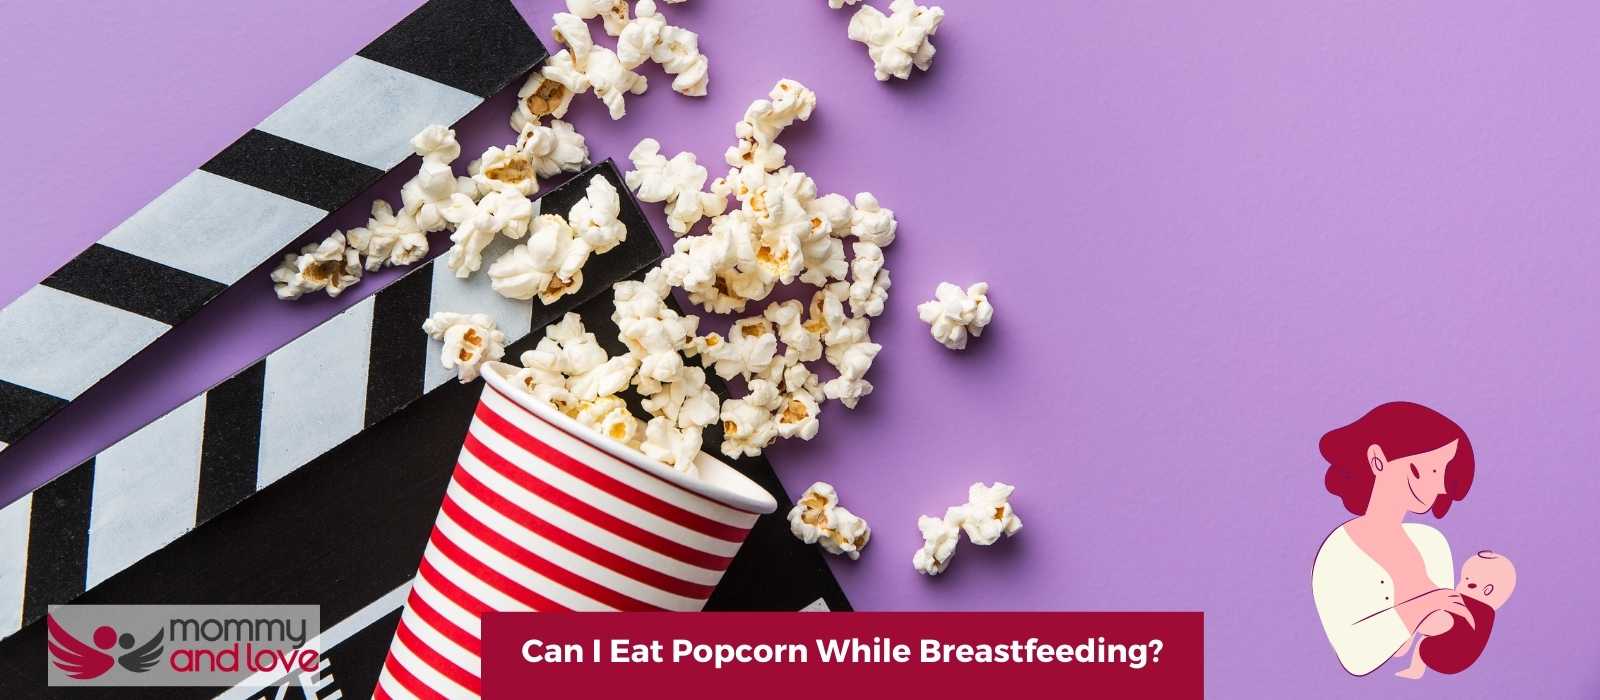 Can I Eat Popcorn While Breastfeeding